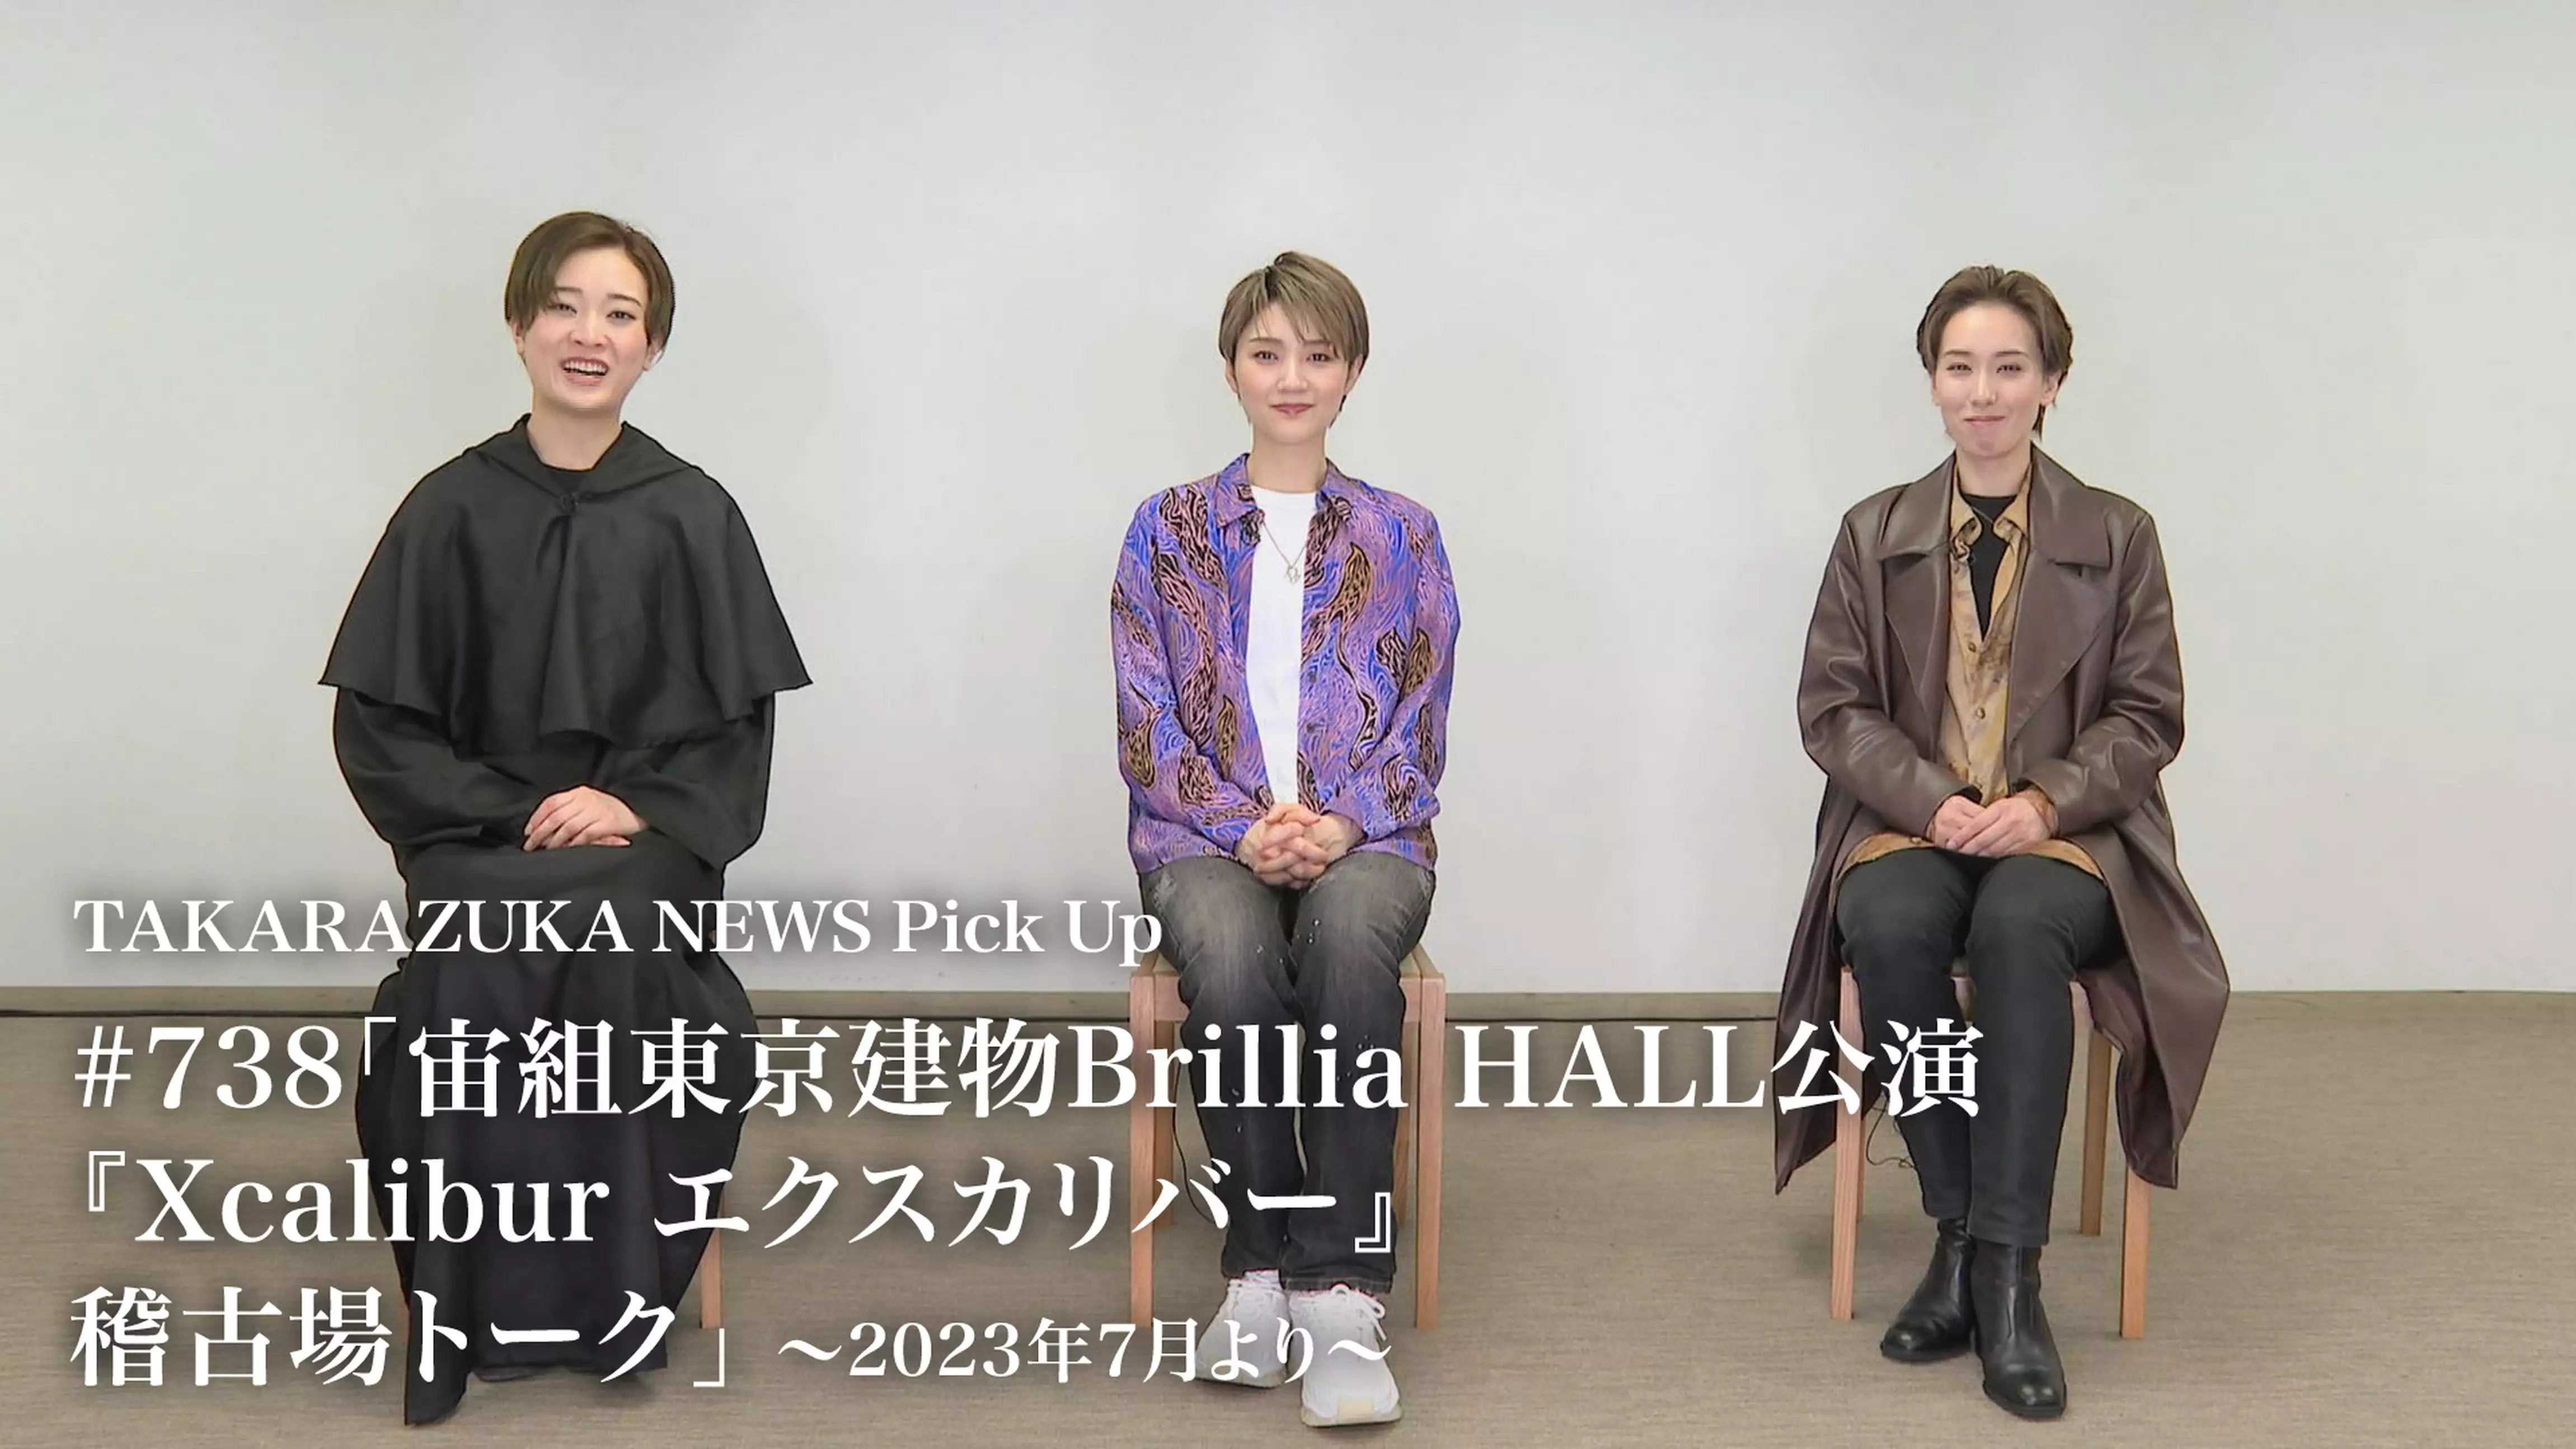 TAKARAZUKA NEWS Pick Up #738「宙組東京建物Brillia HALL公演『Xcalibur エクスカリバー』稽古場トーク」～2023年7月より～